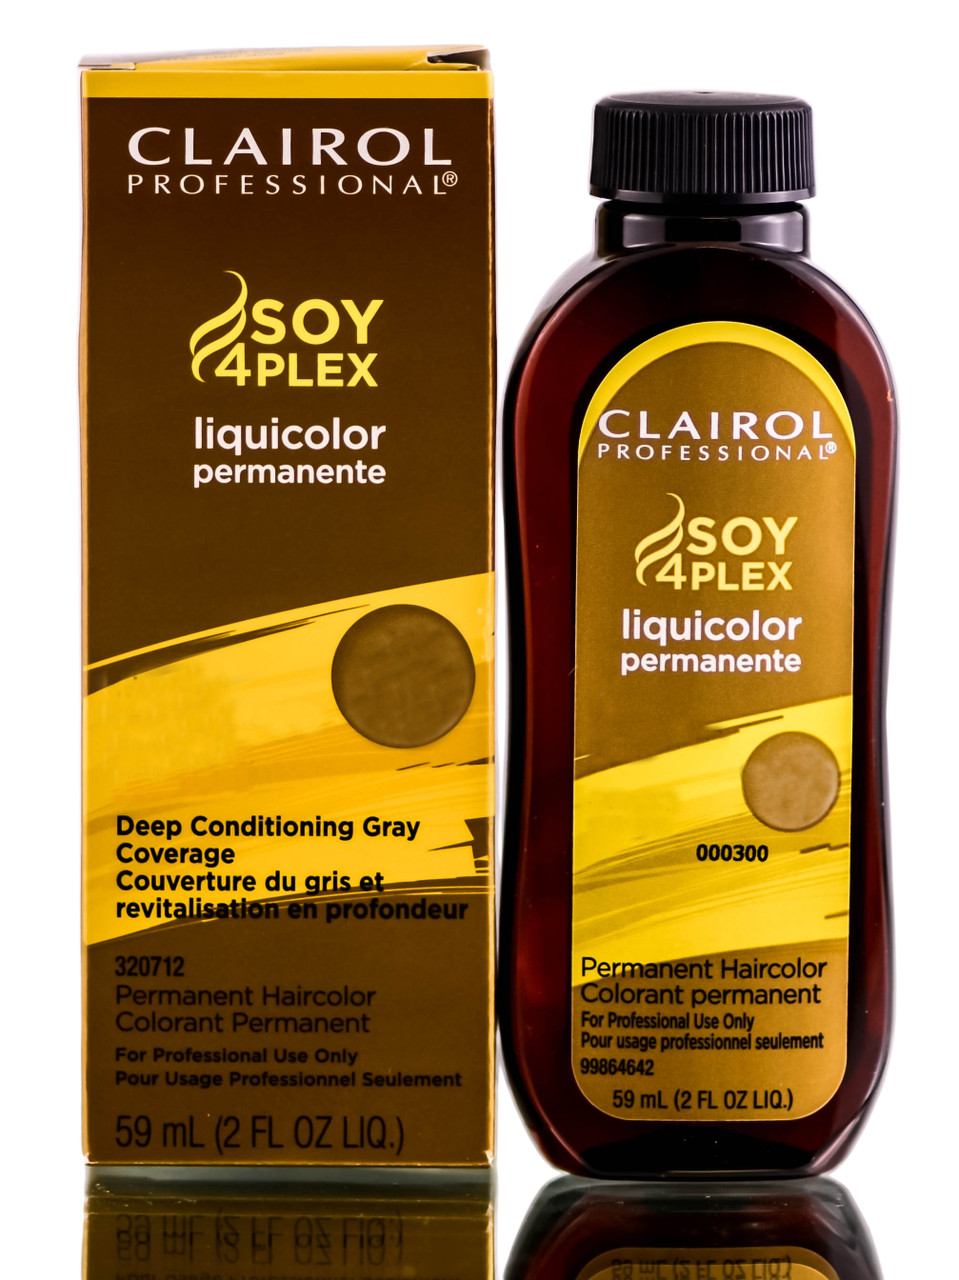 Clairol Professional Liquicolor Permanente Liquid Permanent Hair Color ...